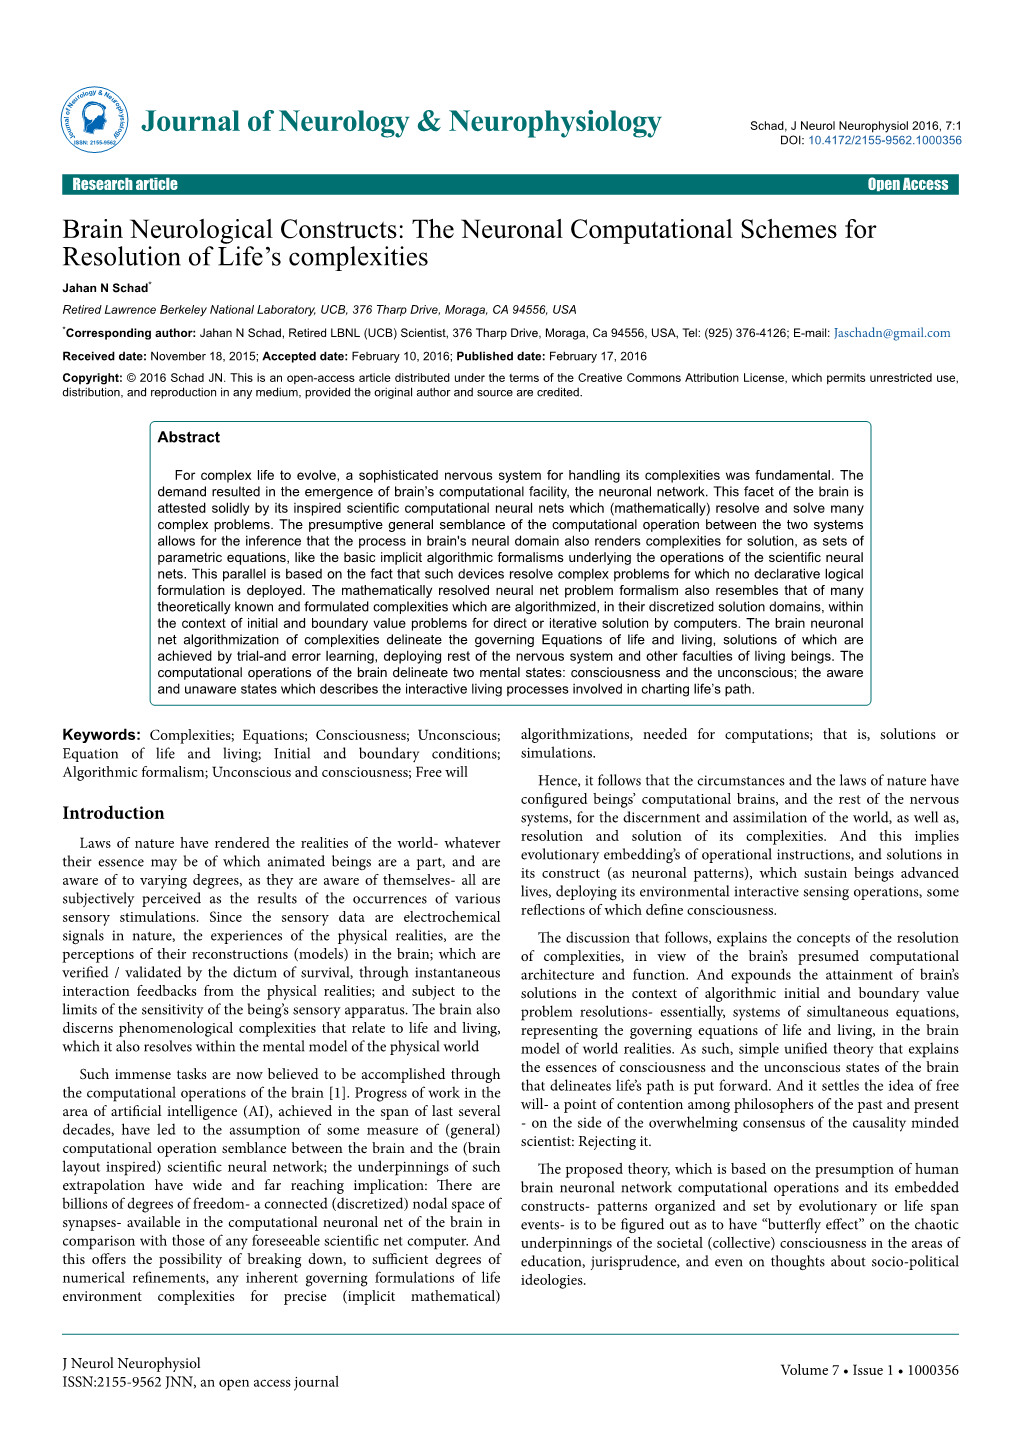 Brain Neurological Constructs: the Neuronal Computational